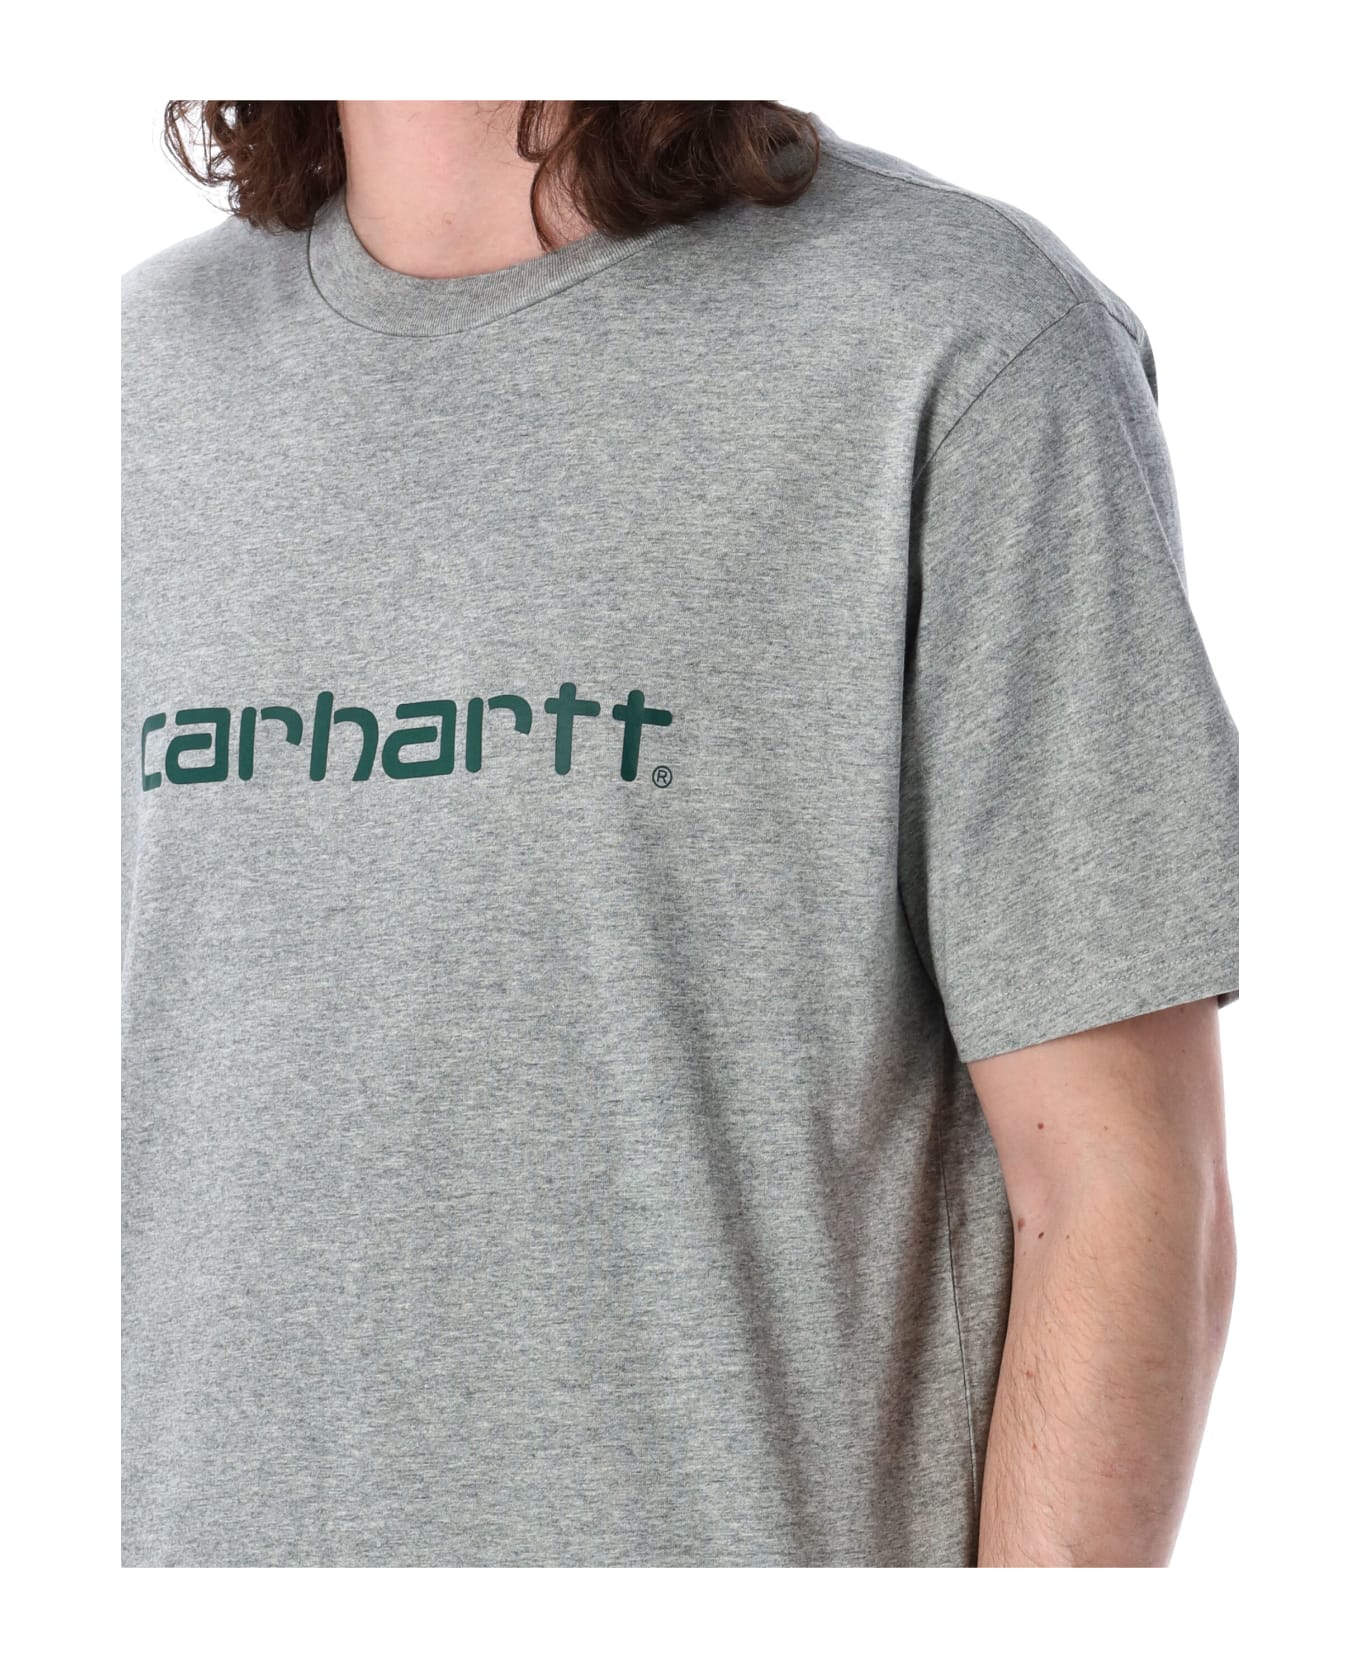 Carhartt Logo T-shirt - GREY HEATHER